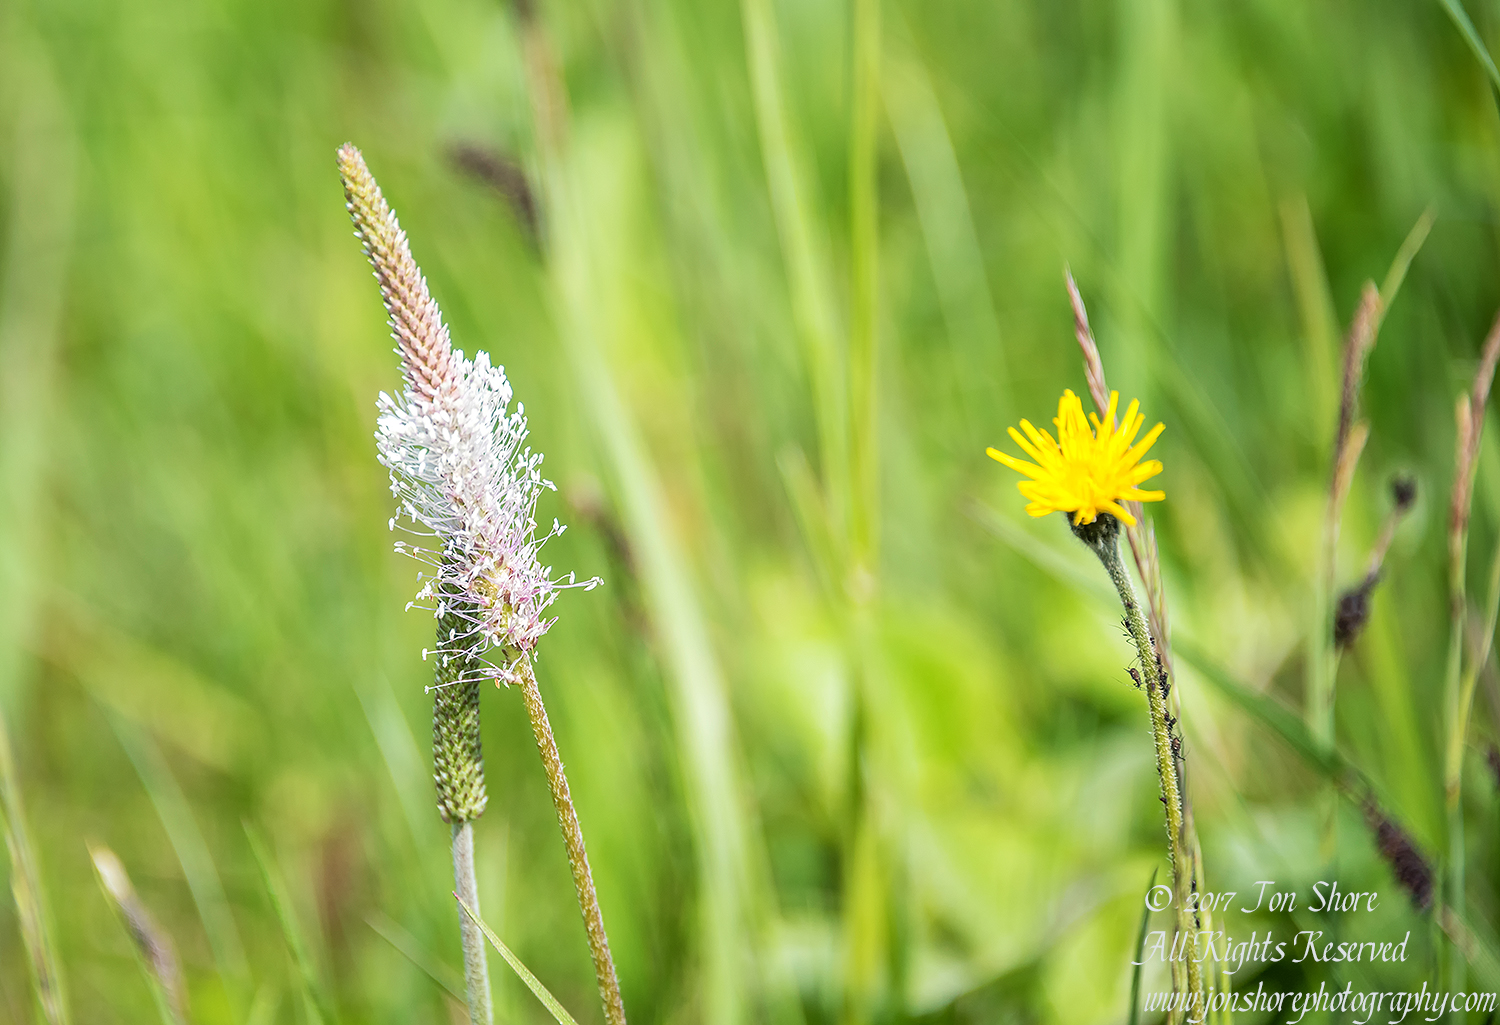 Bright wildflower and background Kemeri National Park Latvia Spring 2017 by Jon Shore. Nikkor 300mm